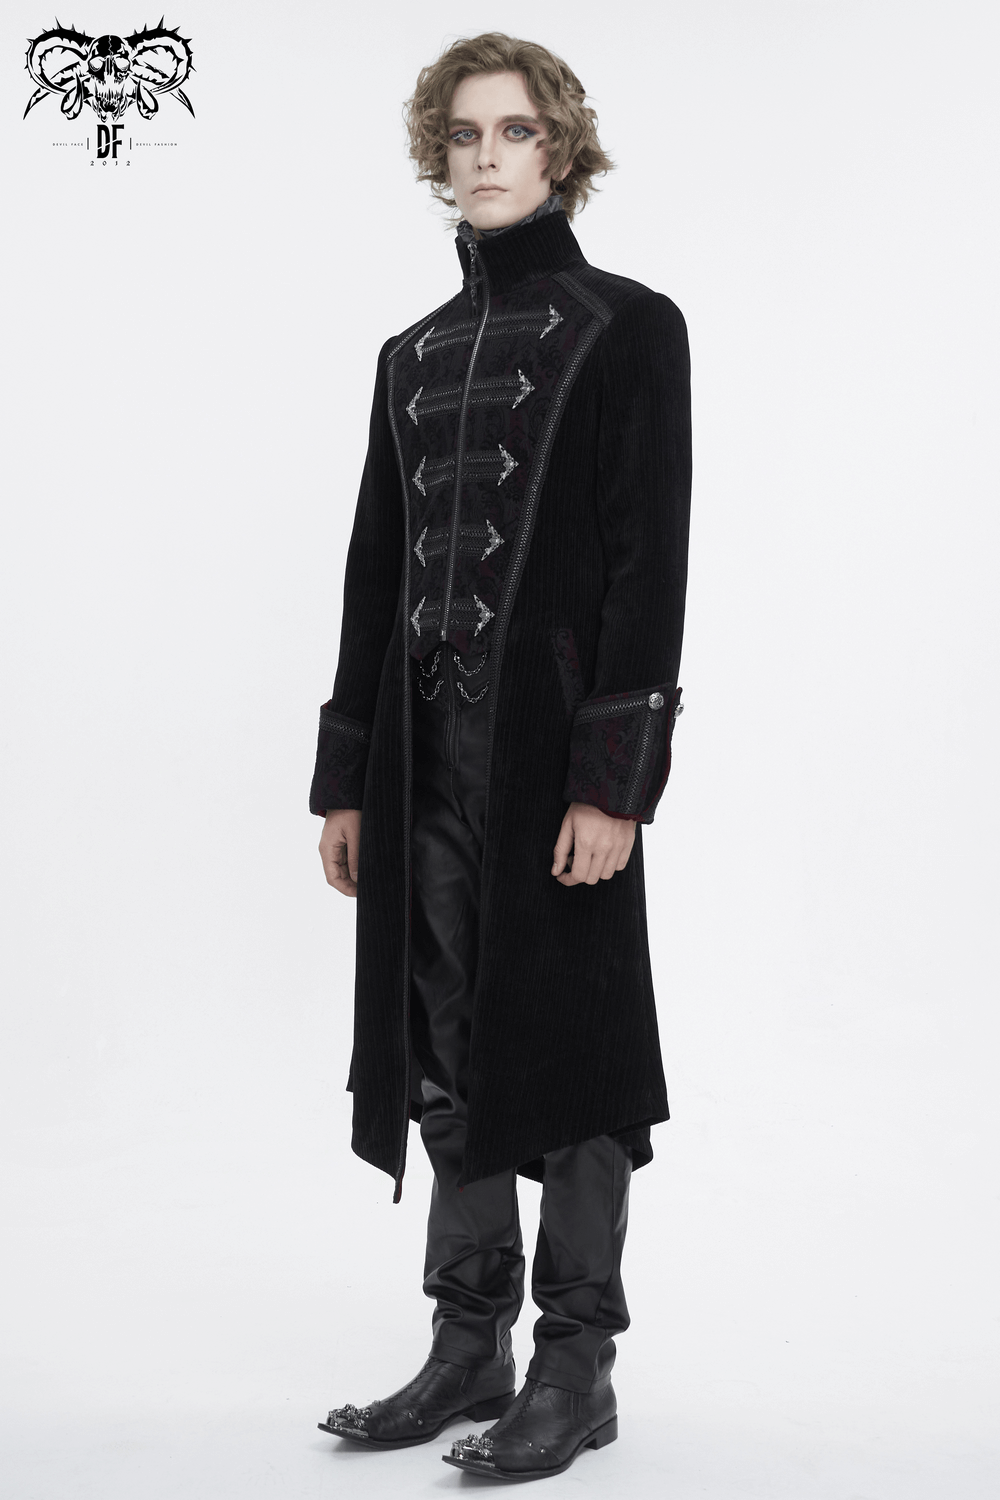 Gothic Velvet Tailcoat for Men with Embroidered Details